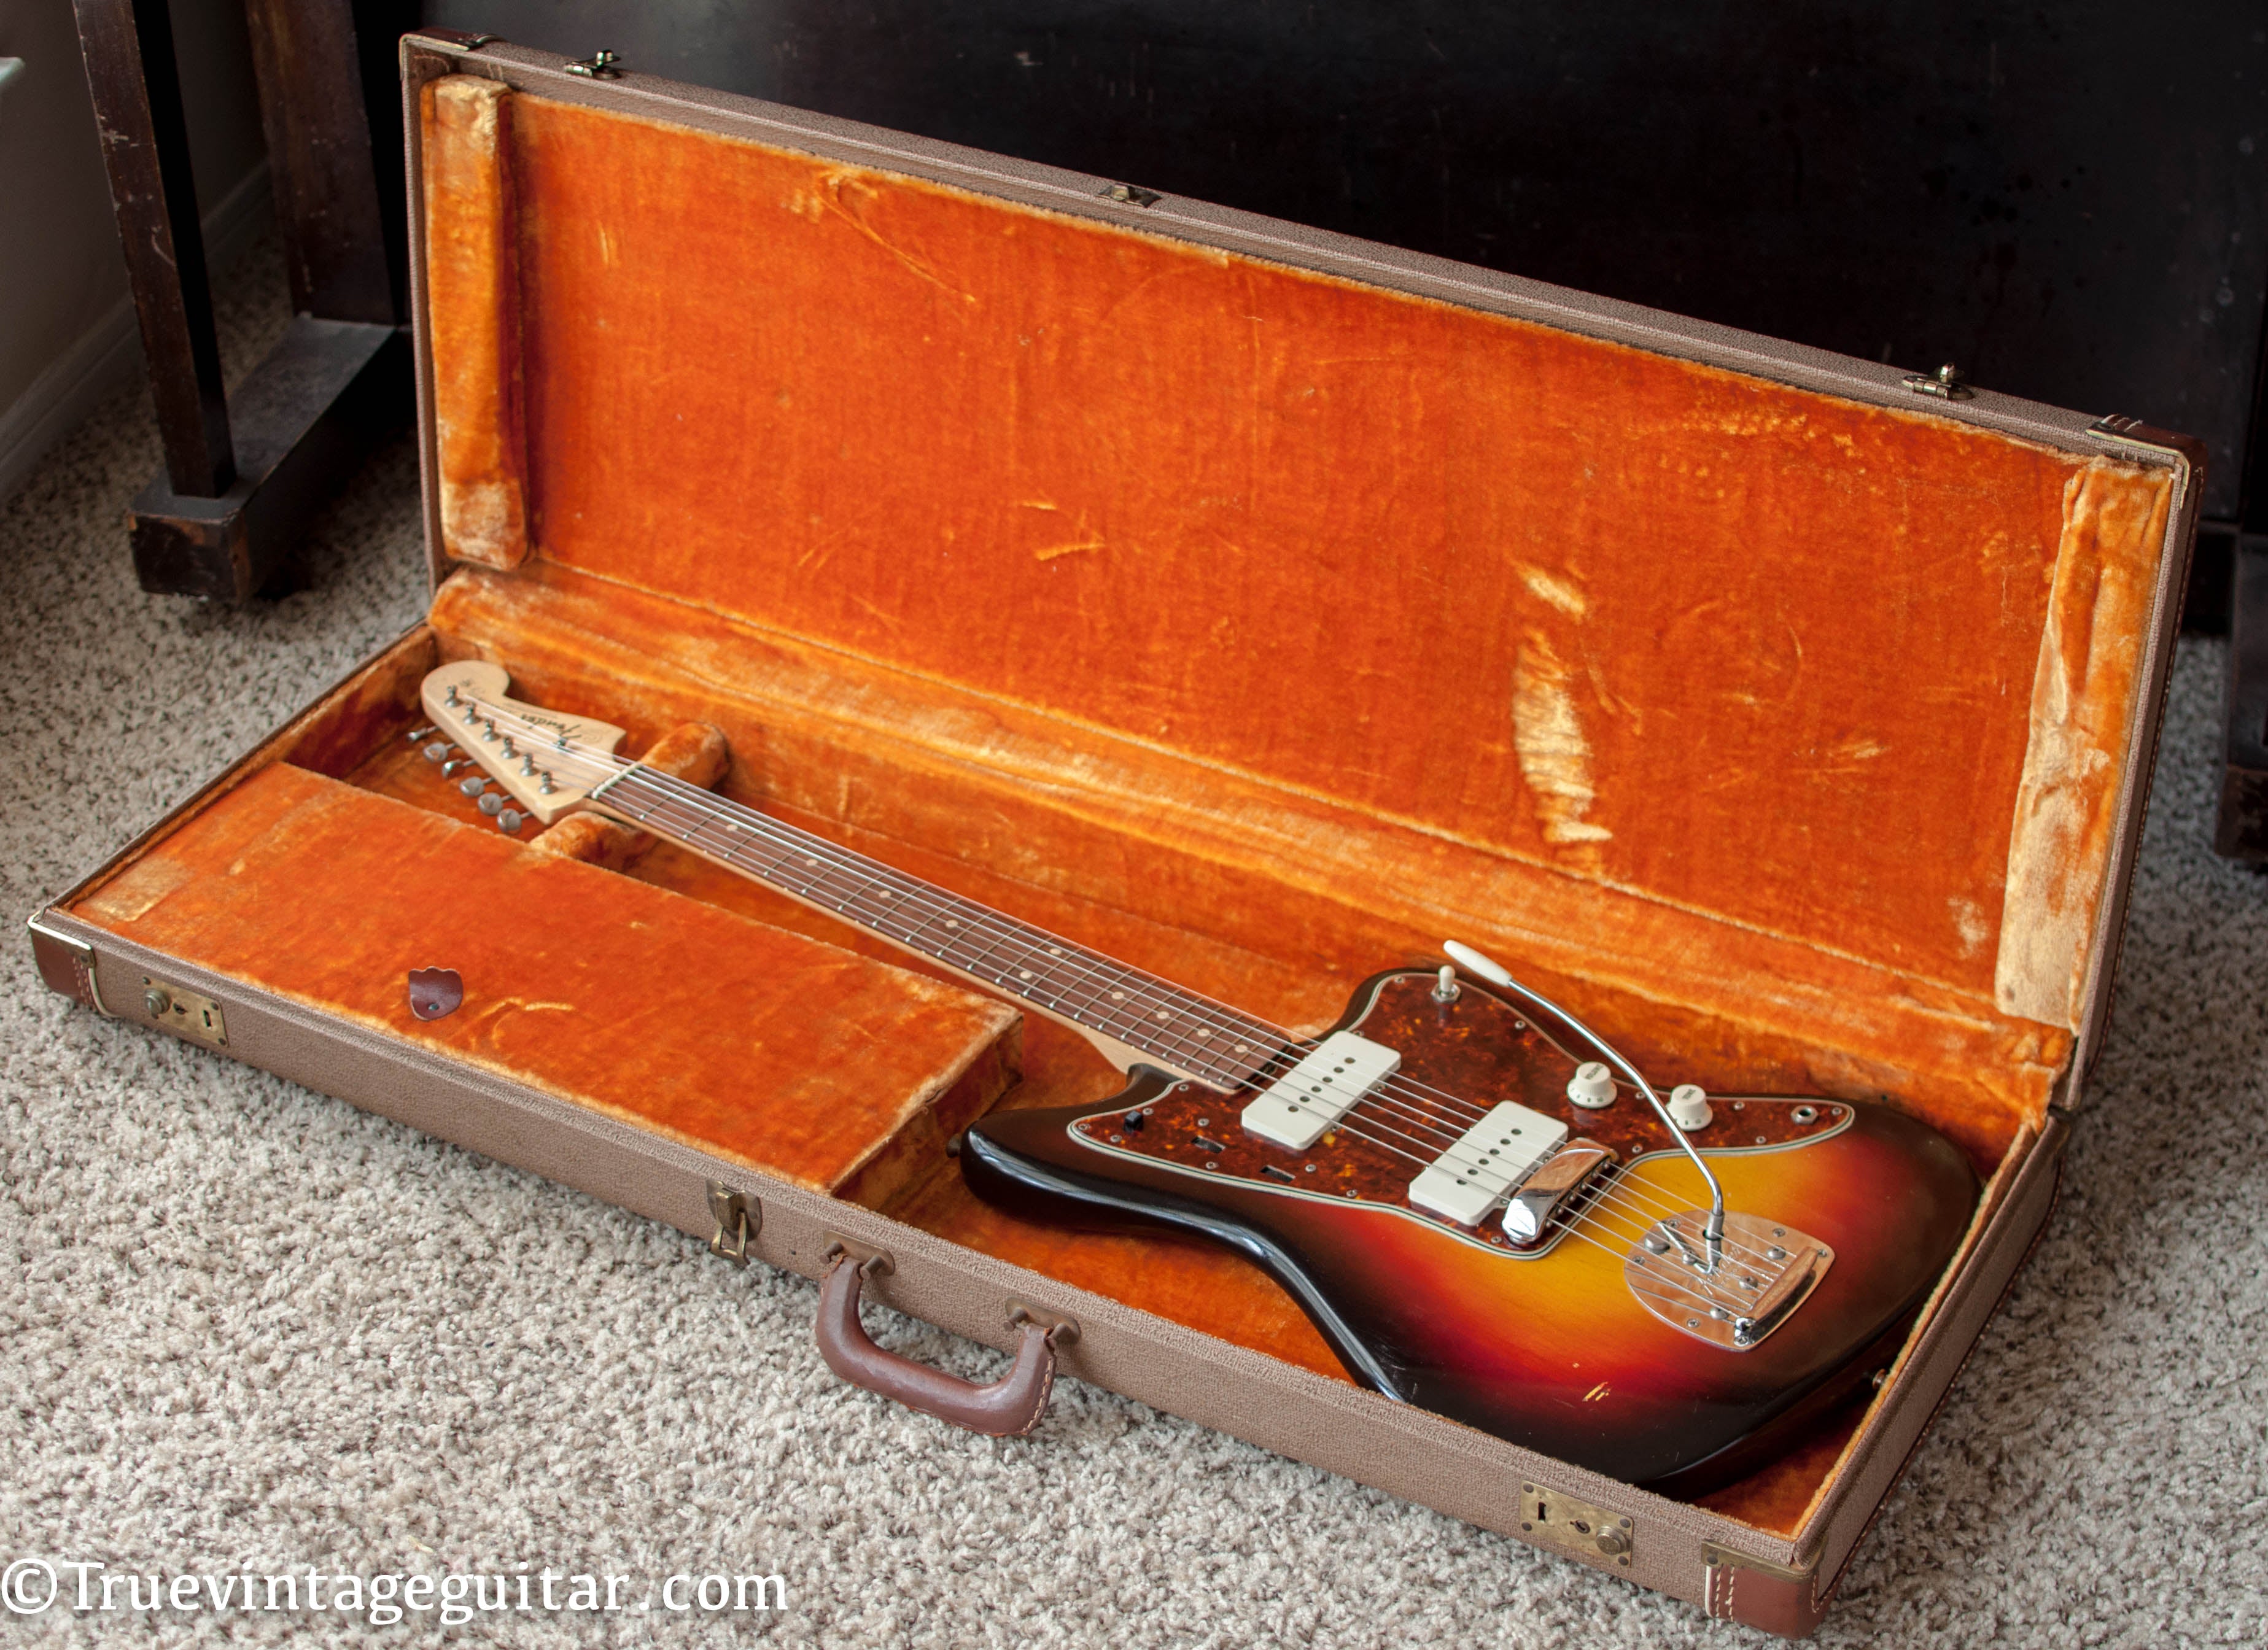 Vintage Fender Jazzmaster guitars